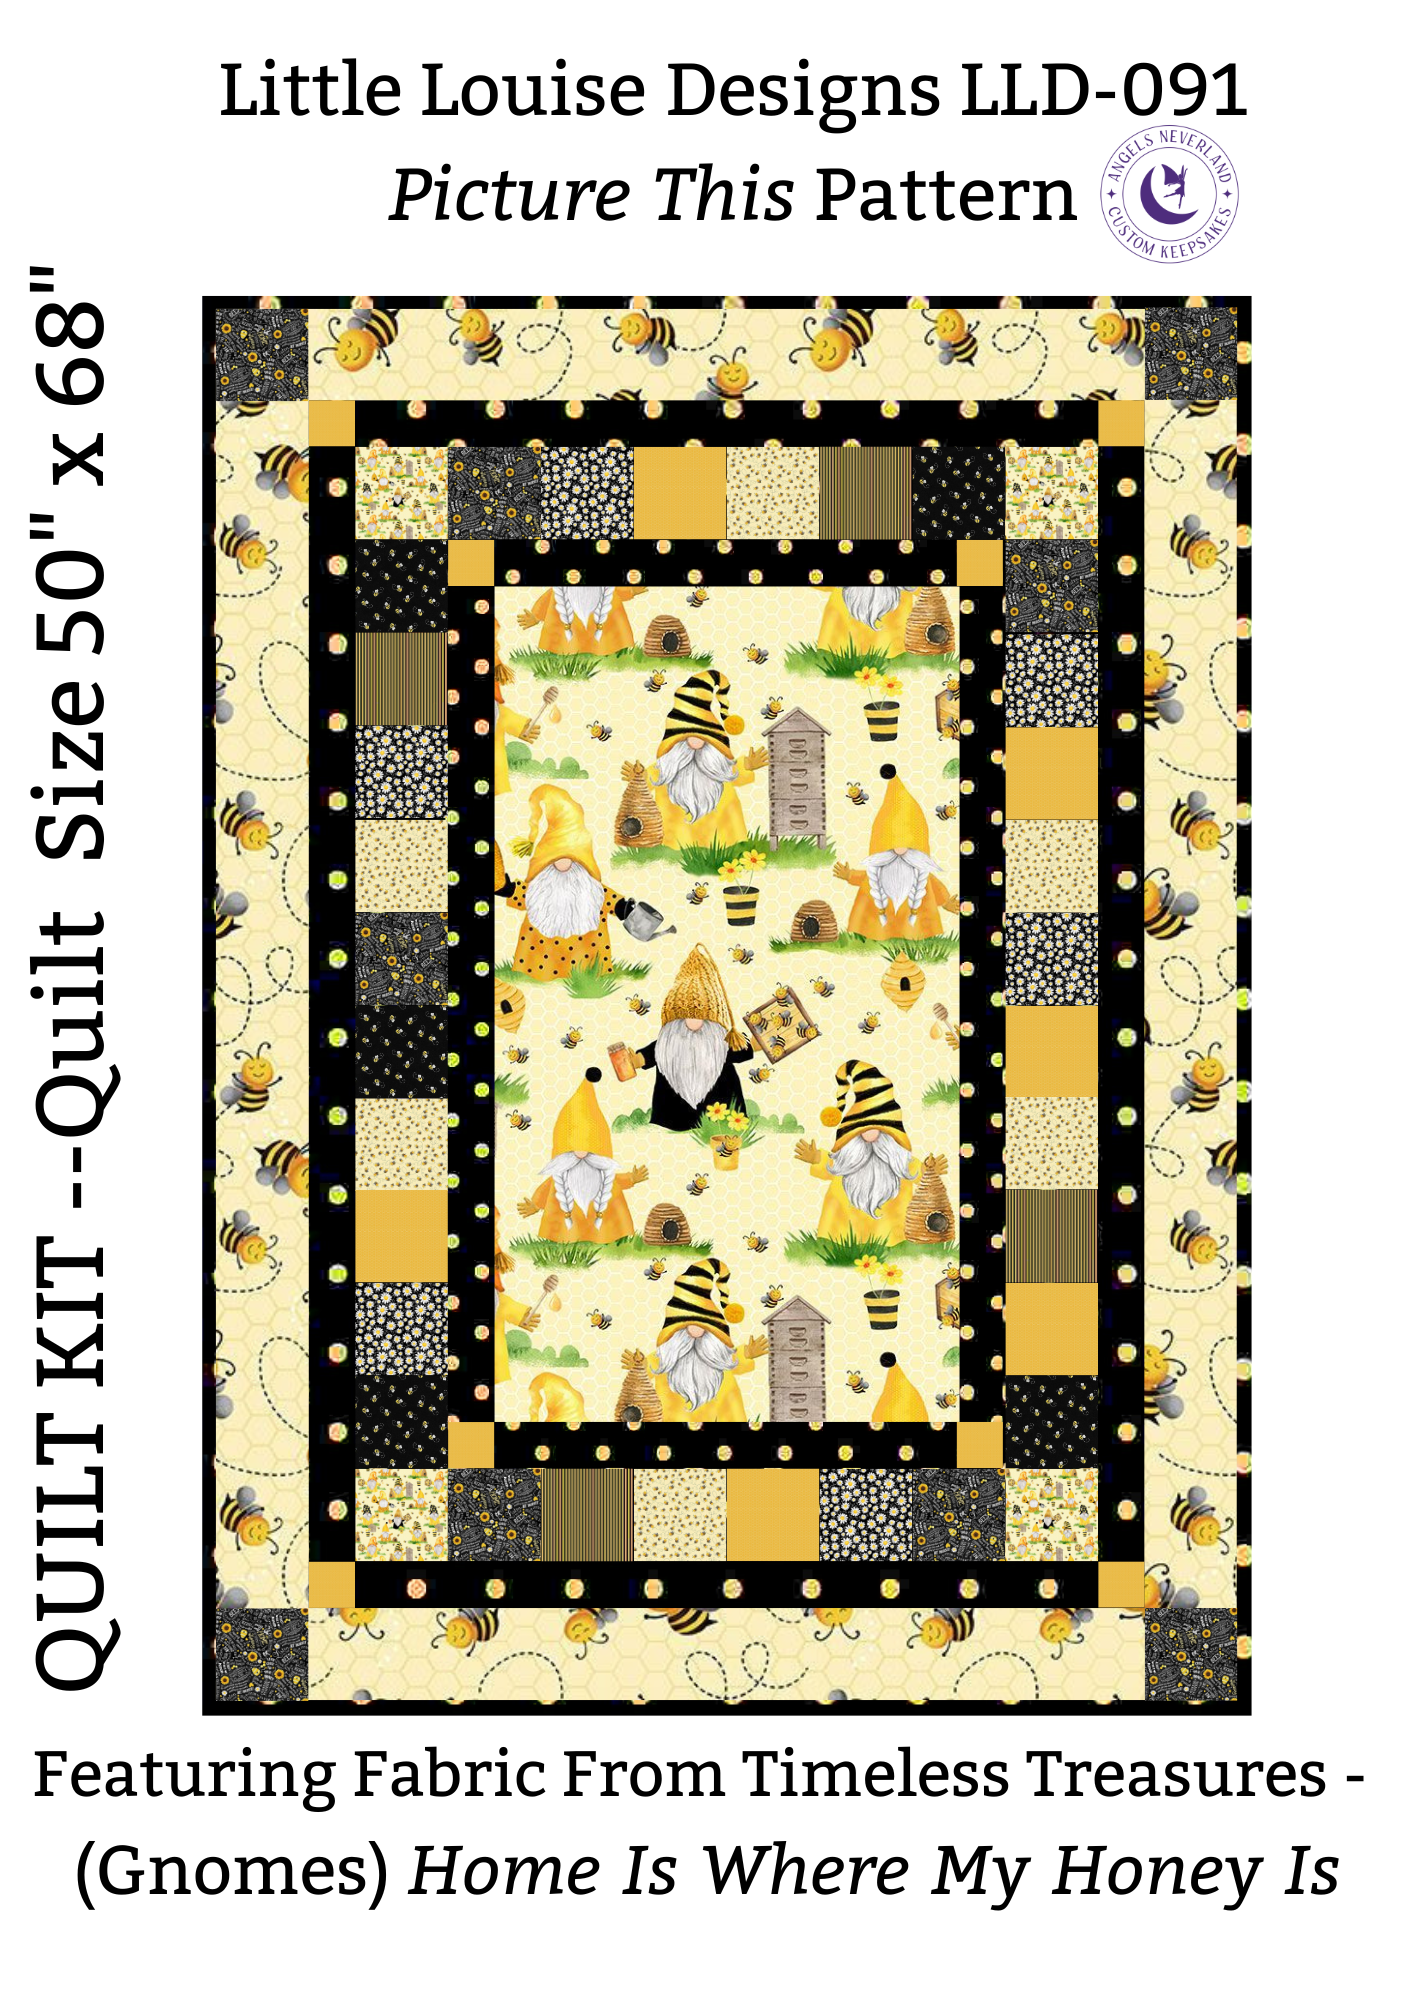 Timeless Treasures Quilt Kit Beginner Gnome Quilt Kit with Picture This Pattern Timeless Treasures Home Is Where My Honey Is